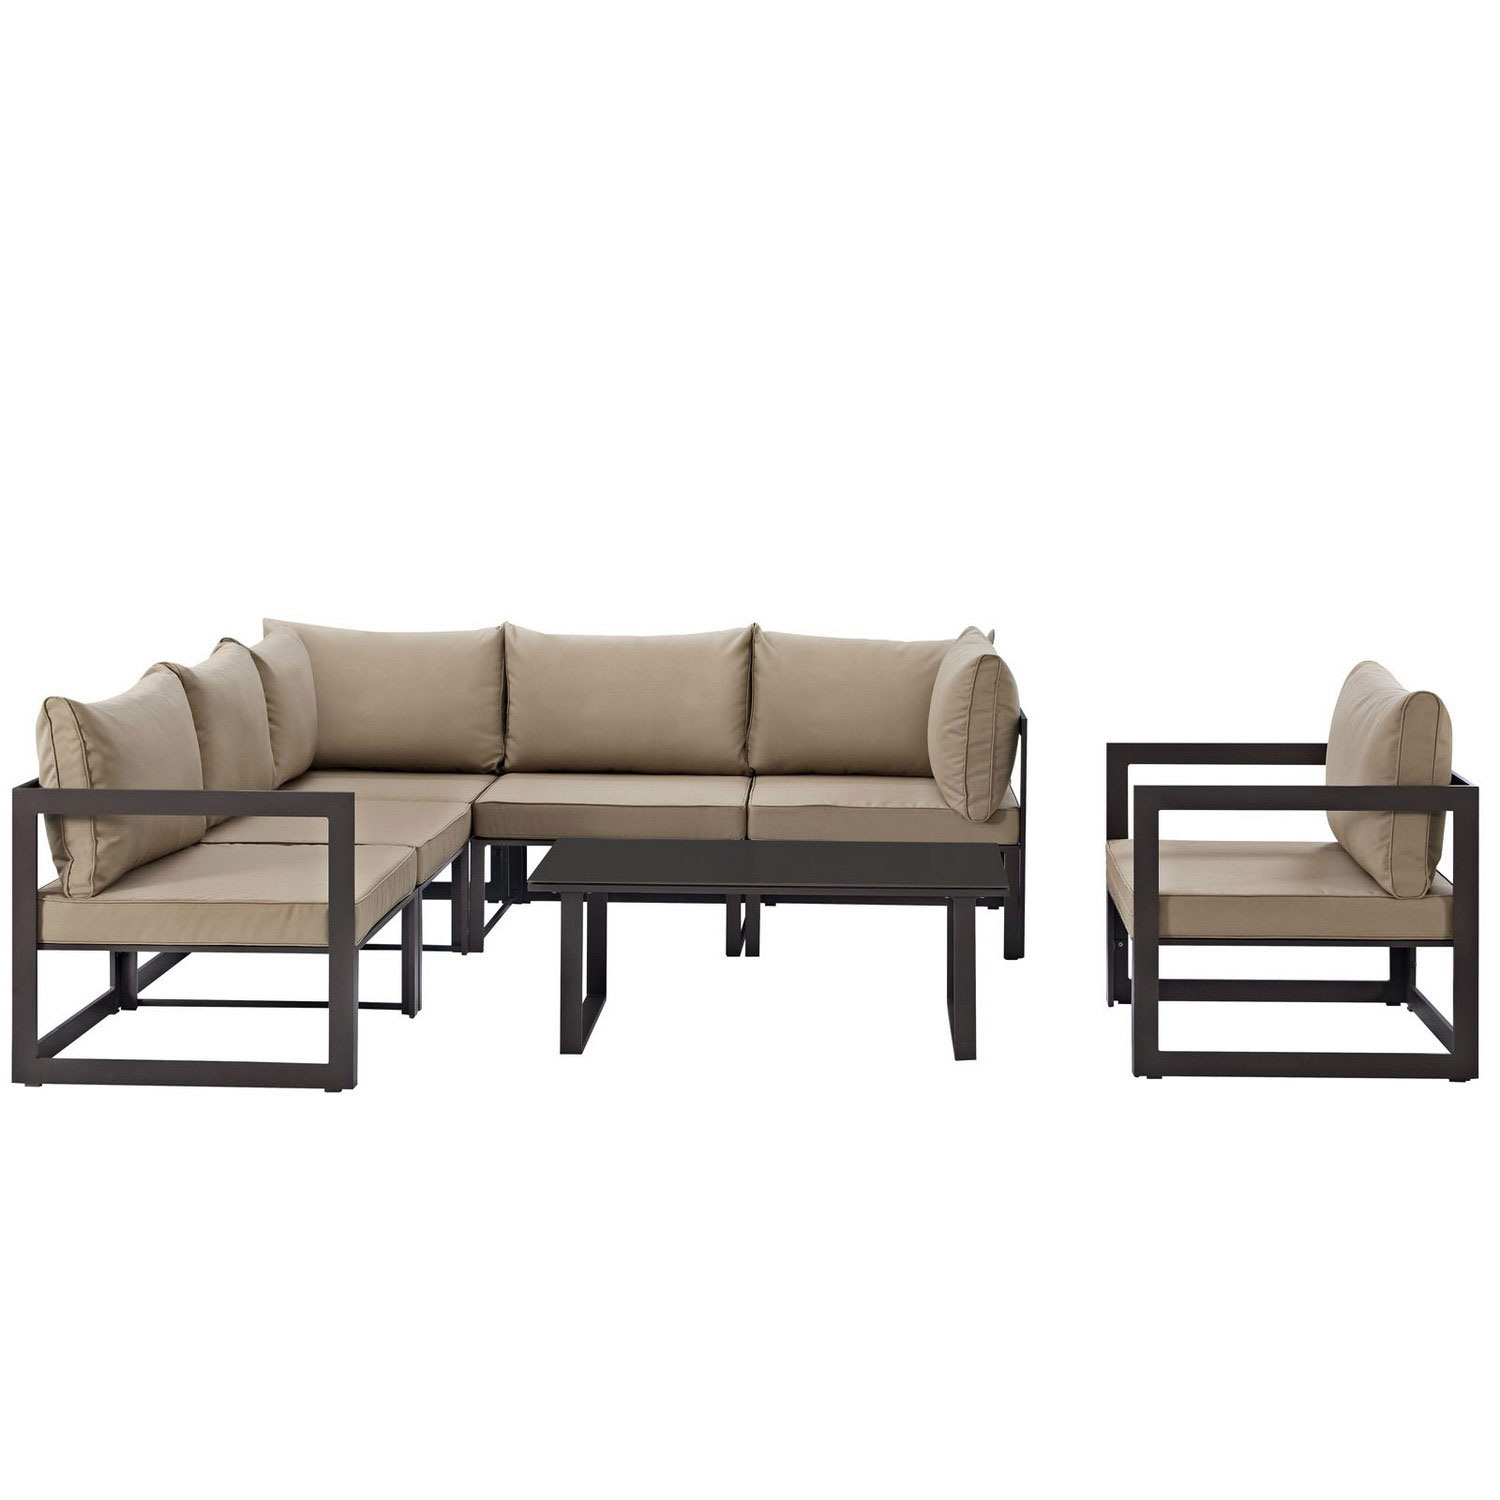 Modway Fortuna 7 Piece Outdoor Patio Sectional Sofa Set - Brown/Mocha